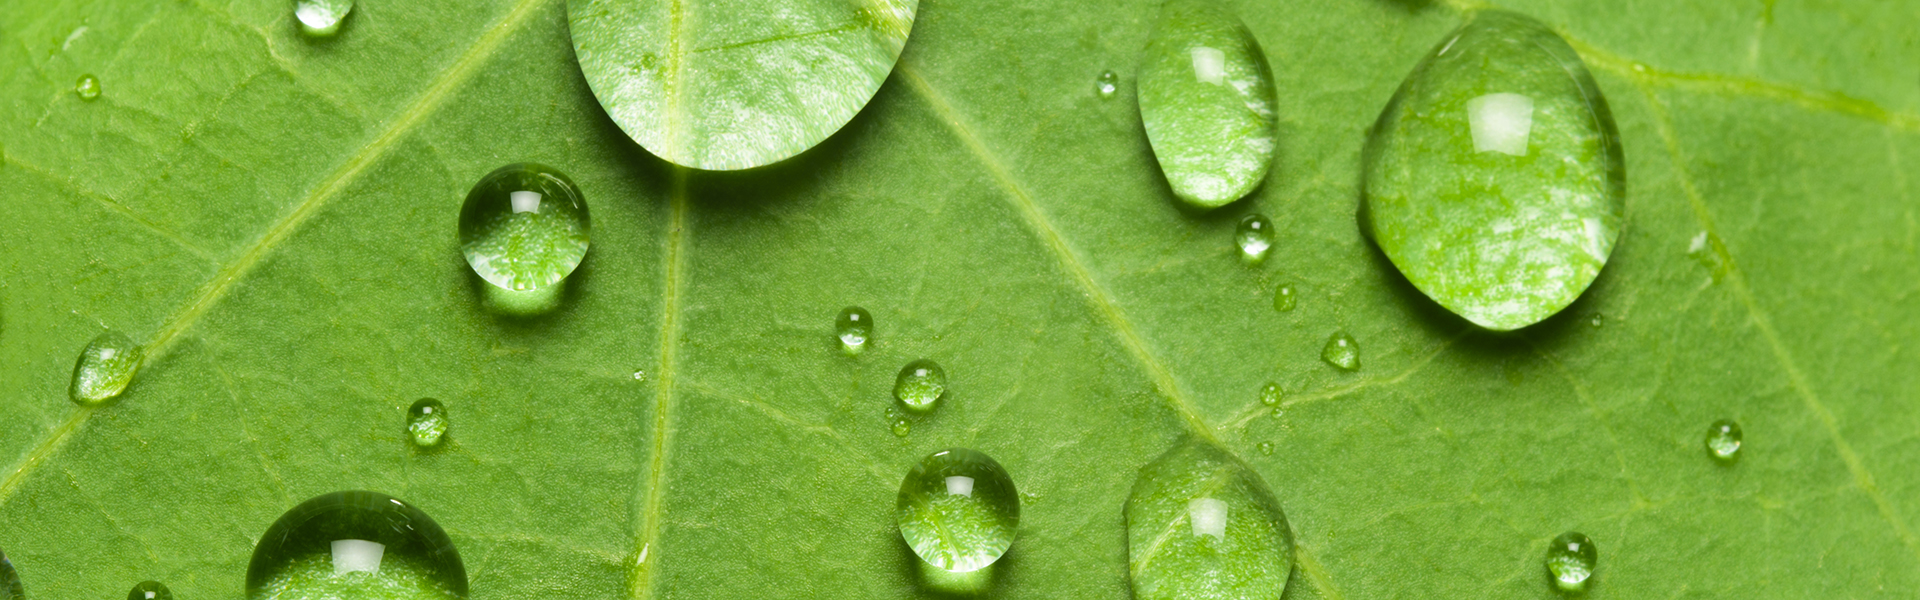 Nahaufnahme des Lotuseffektes bei einem grünen Blatt